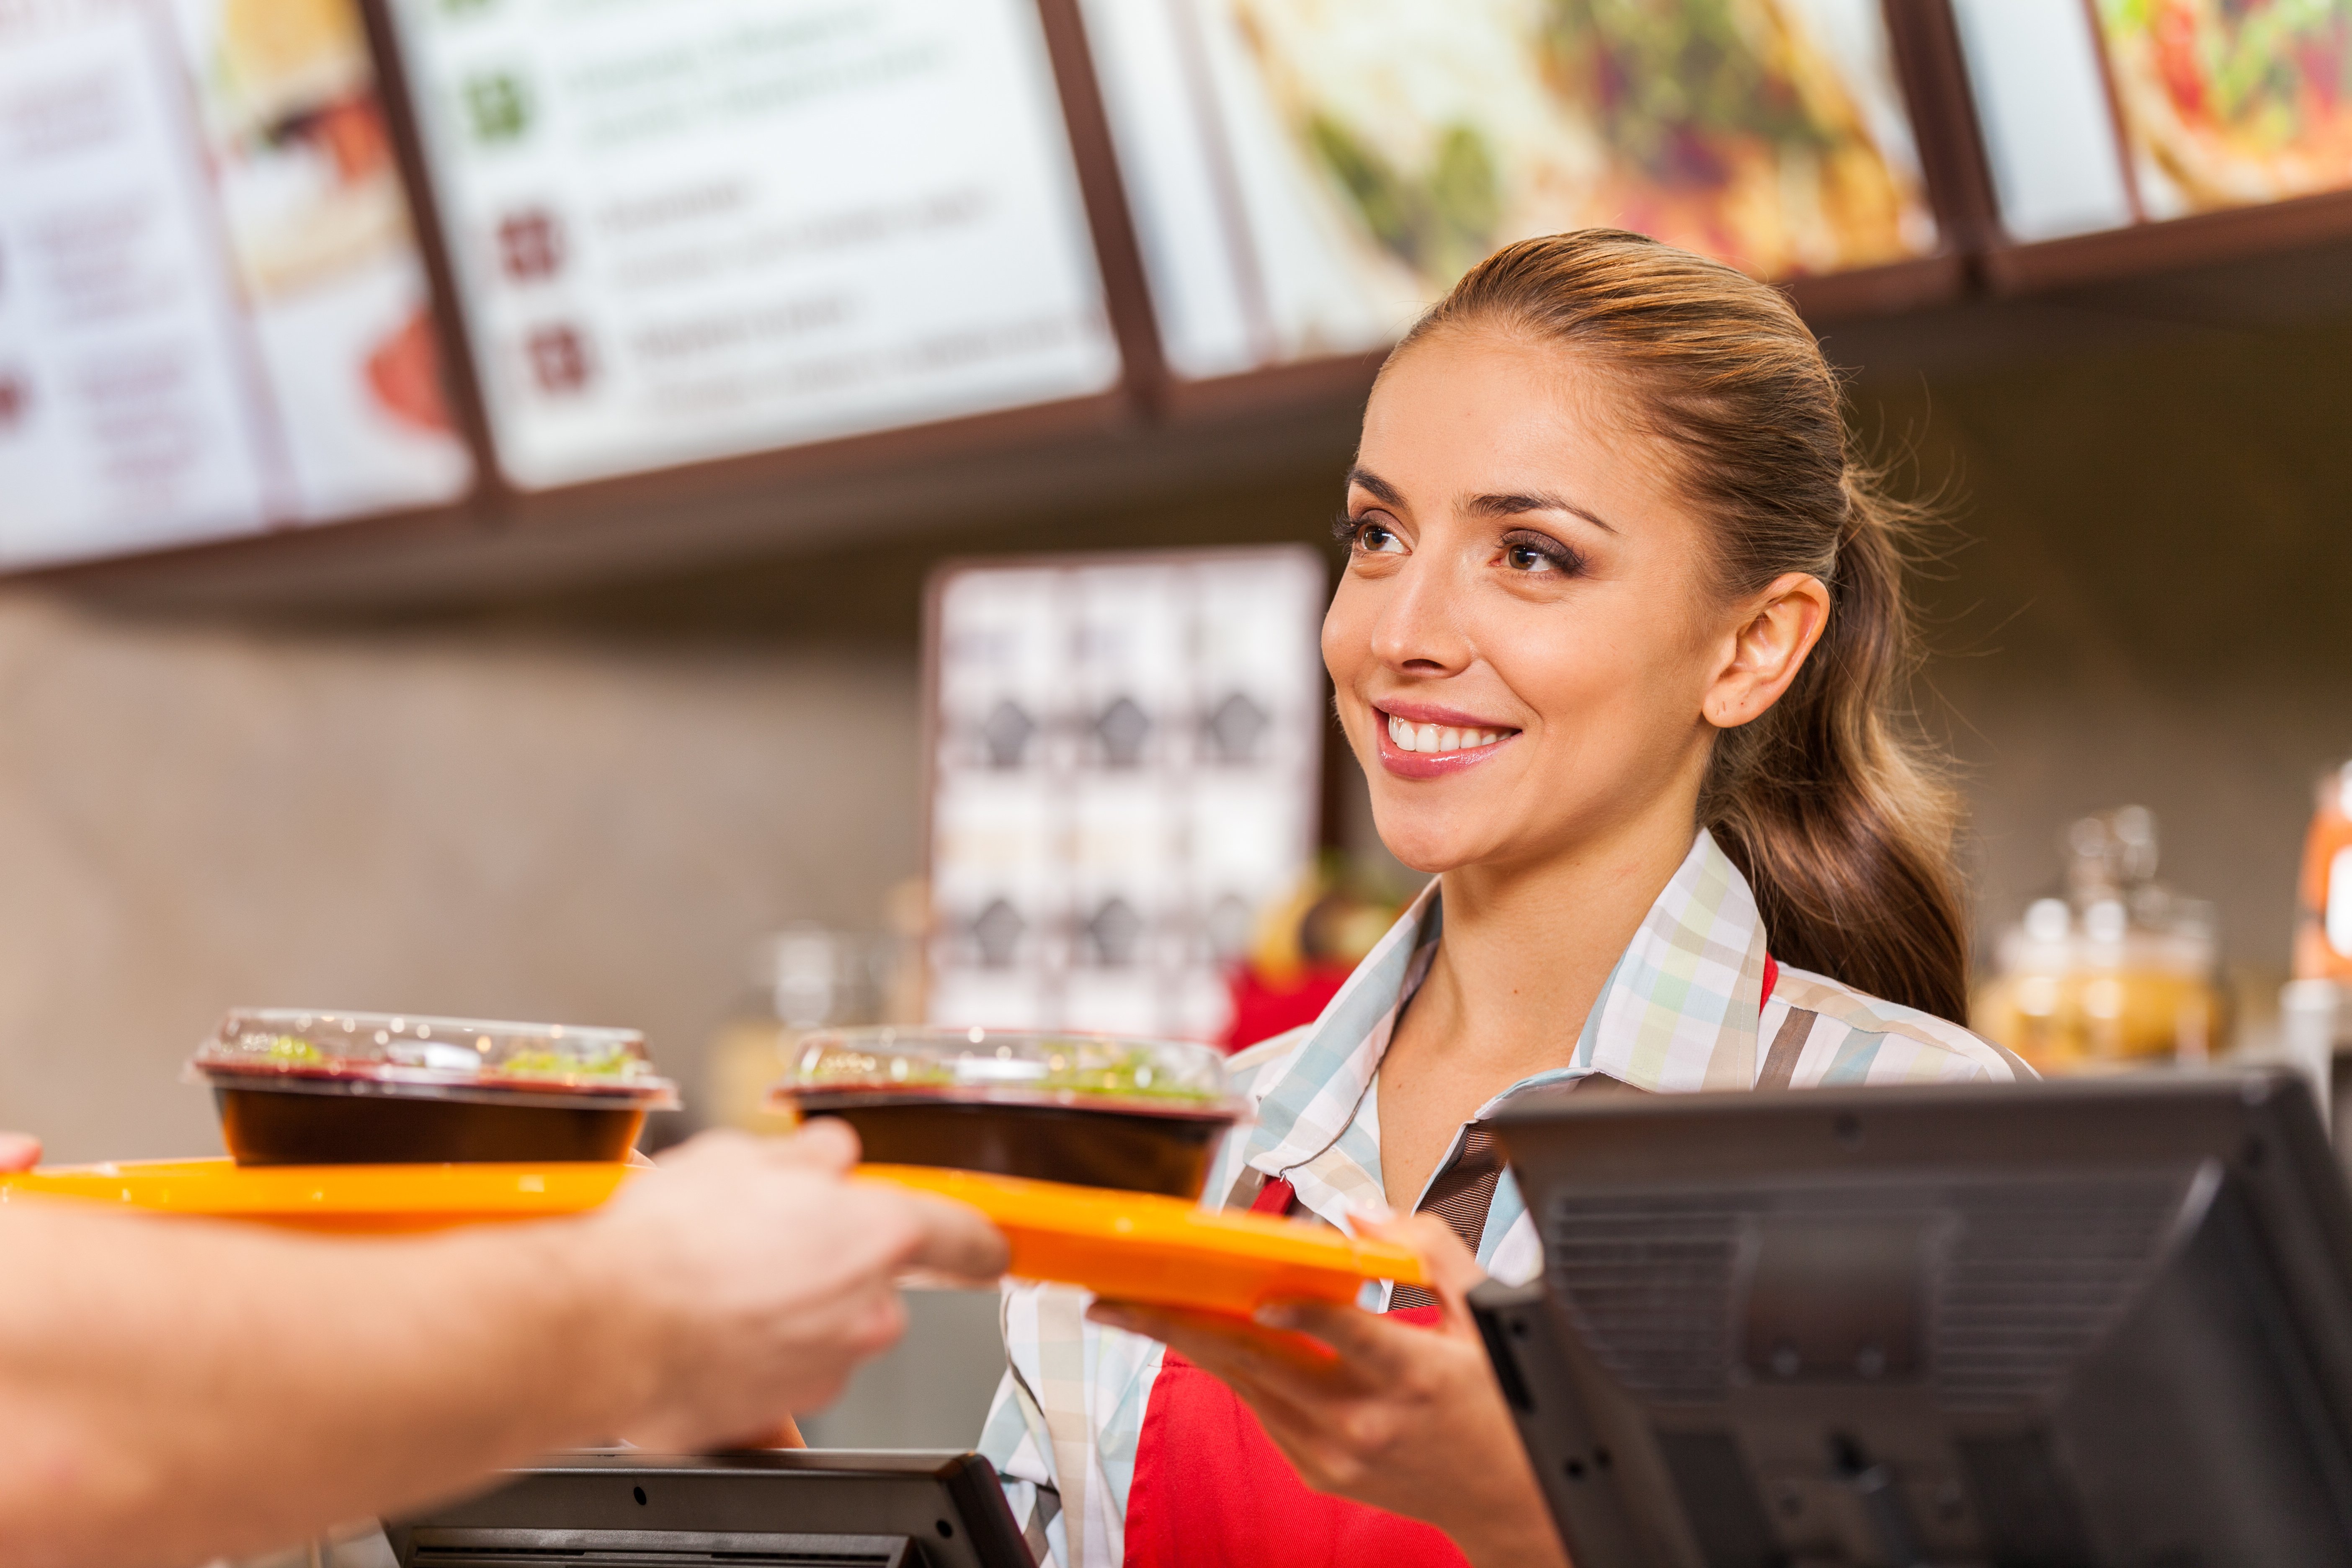 fast food cashier